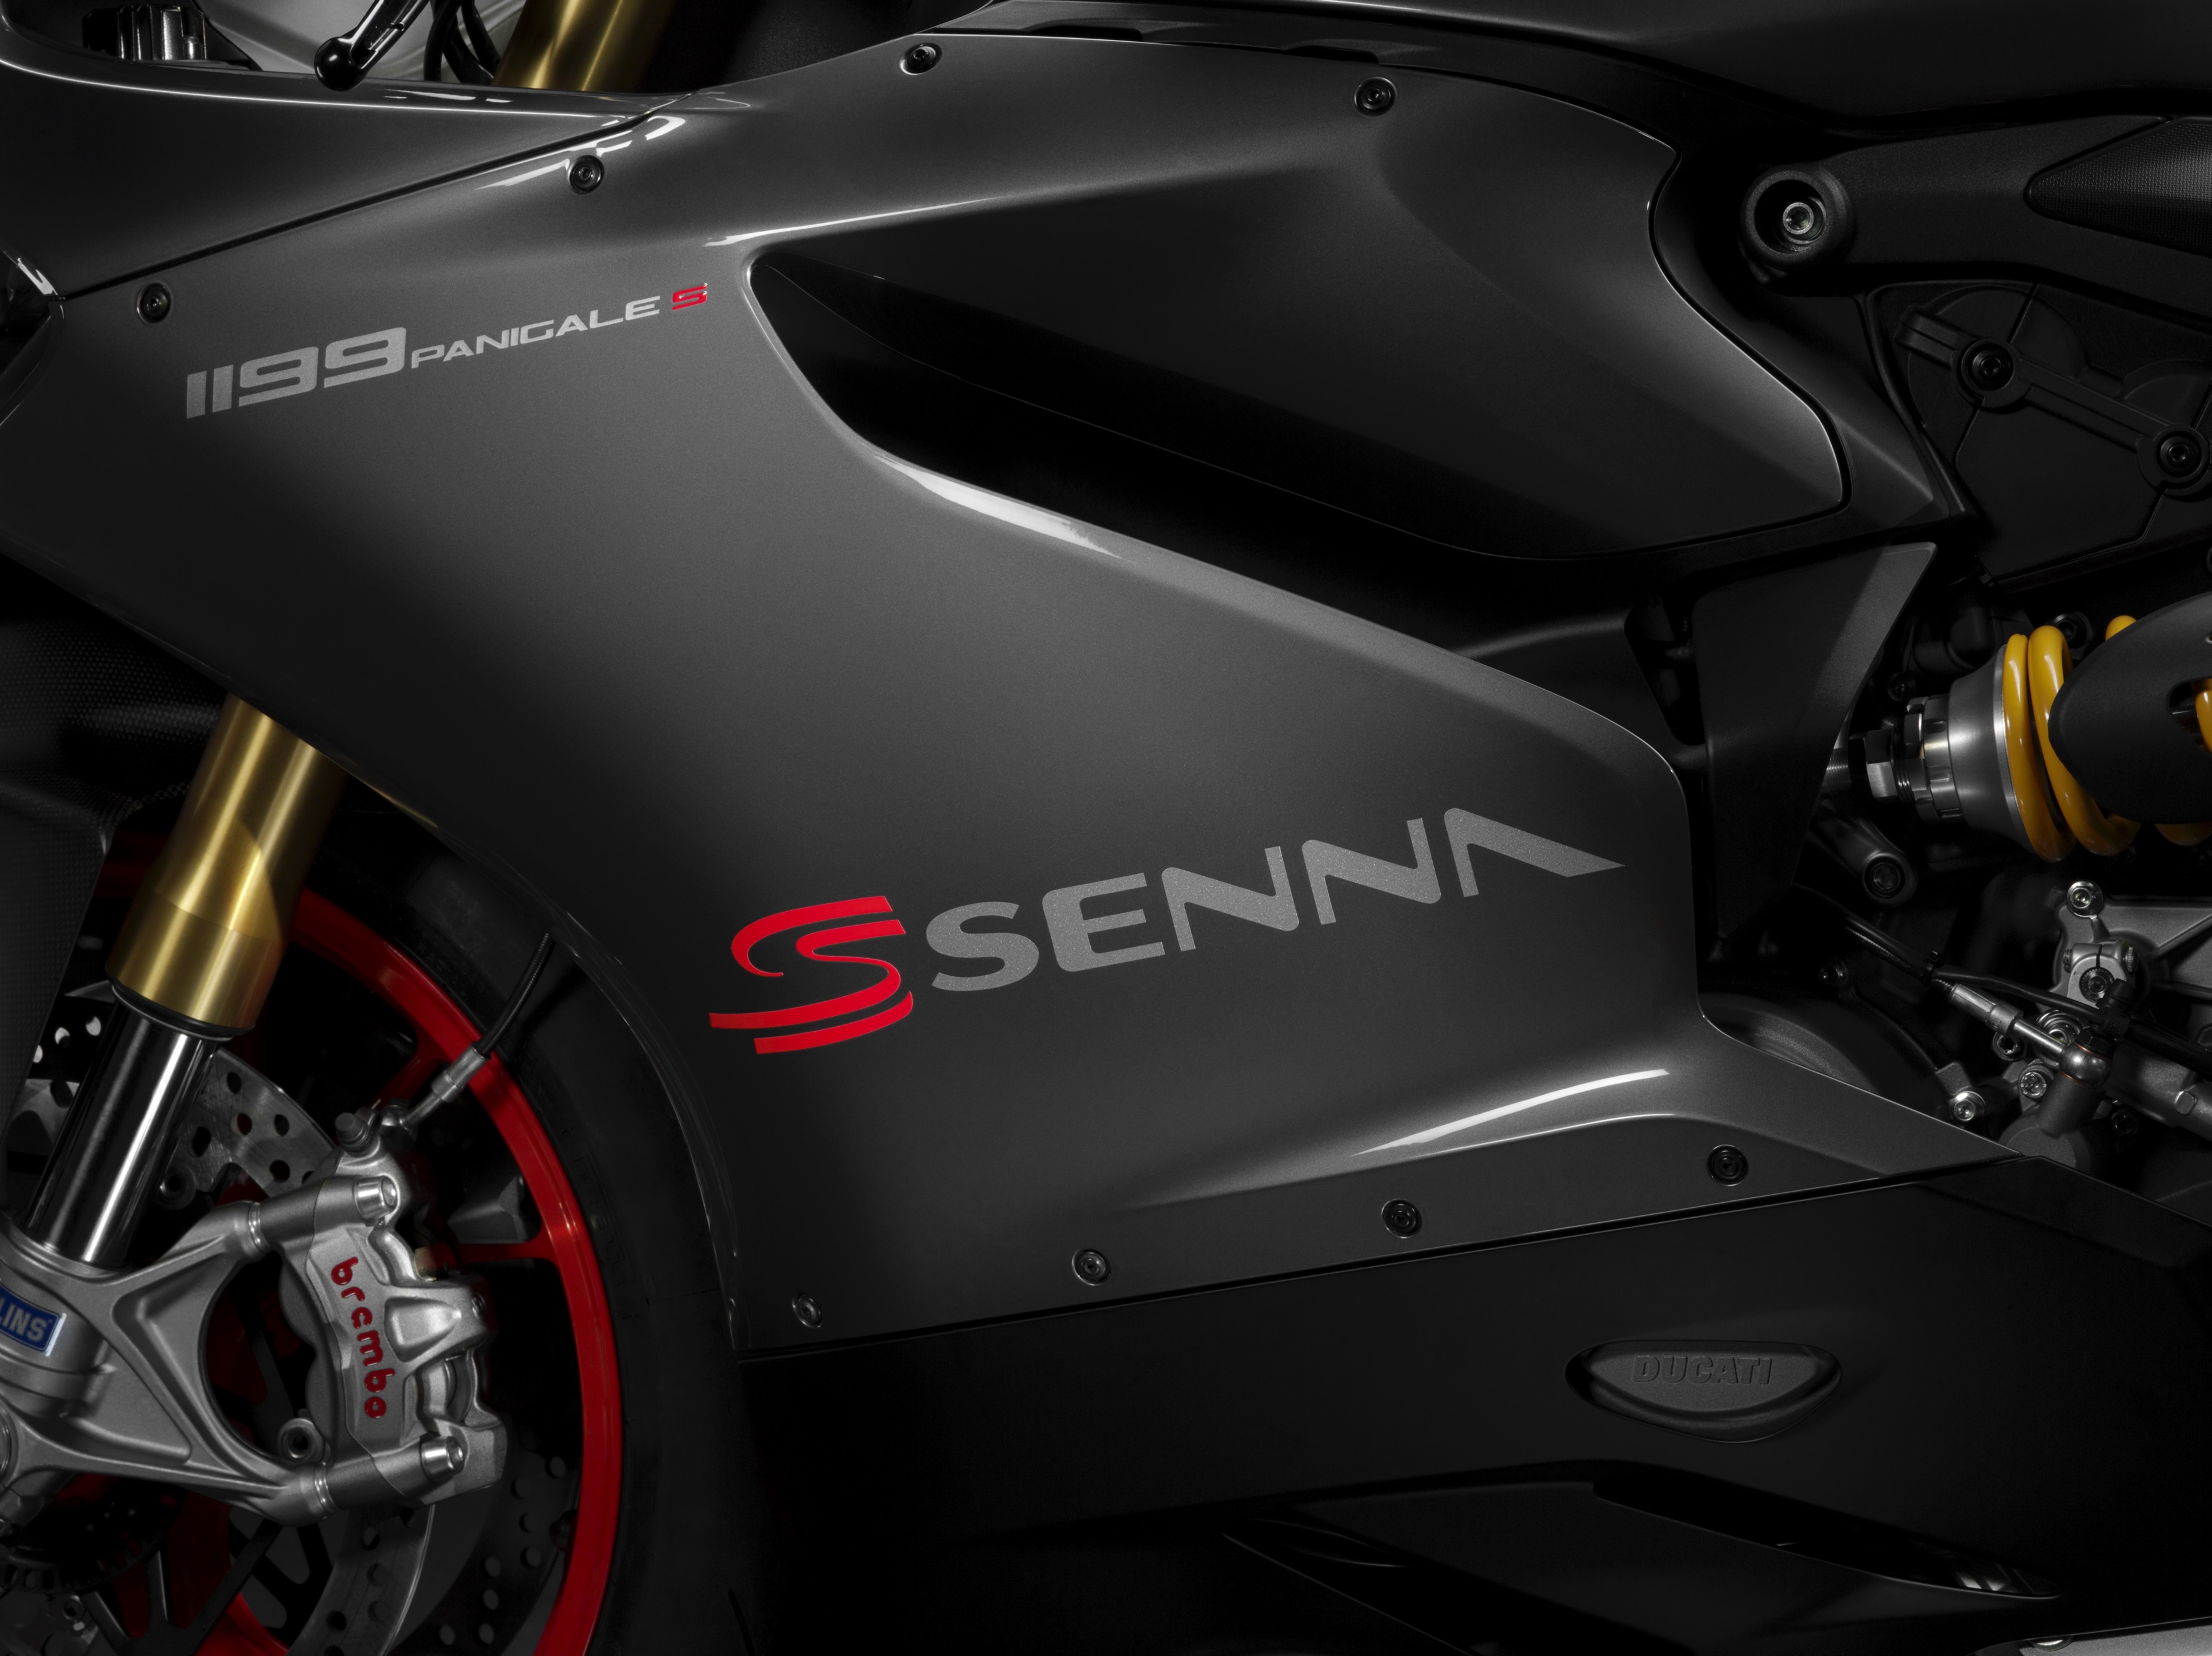 New Ducati Panigale ‘Senna’